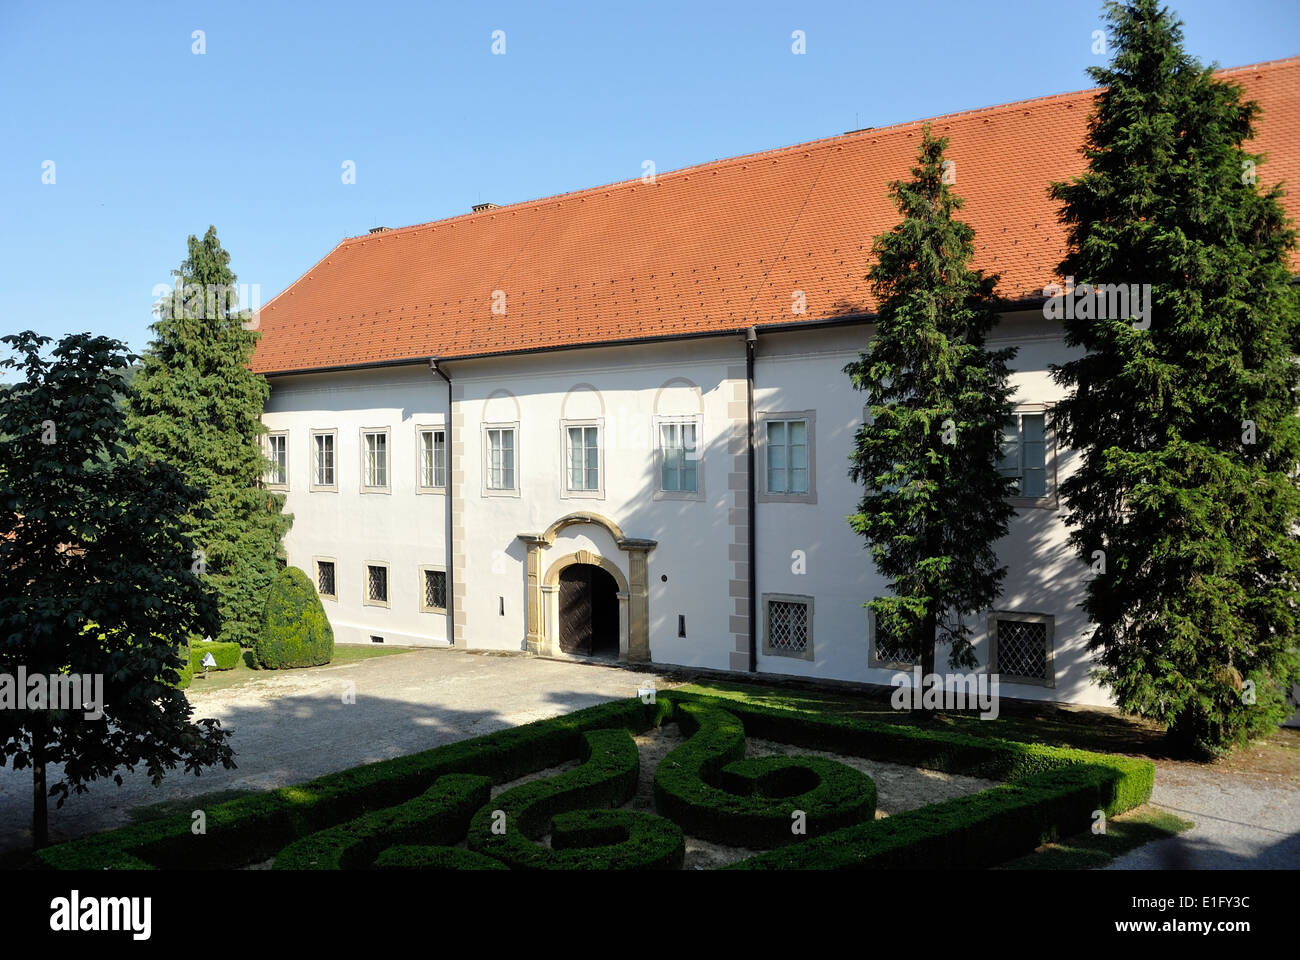 Orsic castle - dvorac Orsic, Donja Stubica, Hrvatsko Zagorje, Croatia, EU Stock Photo